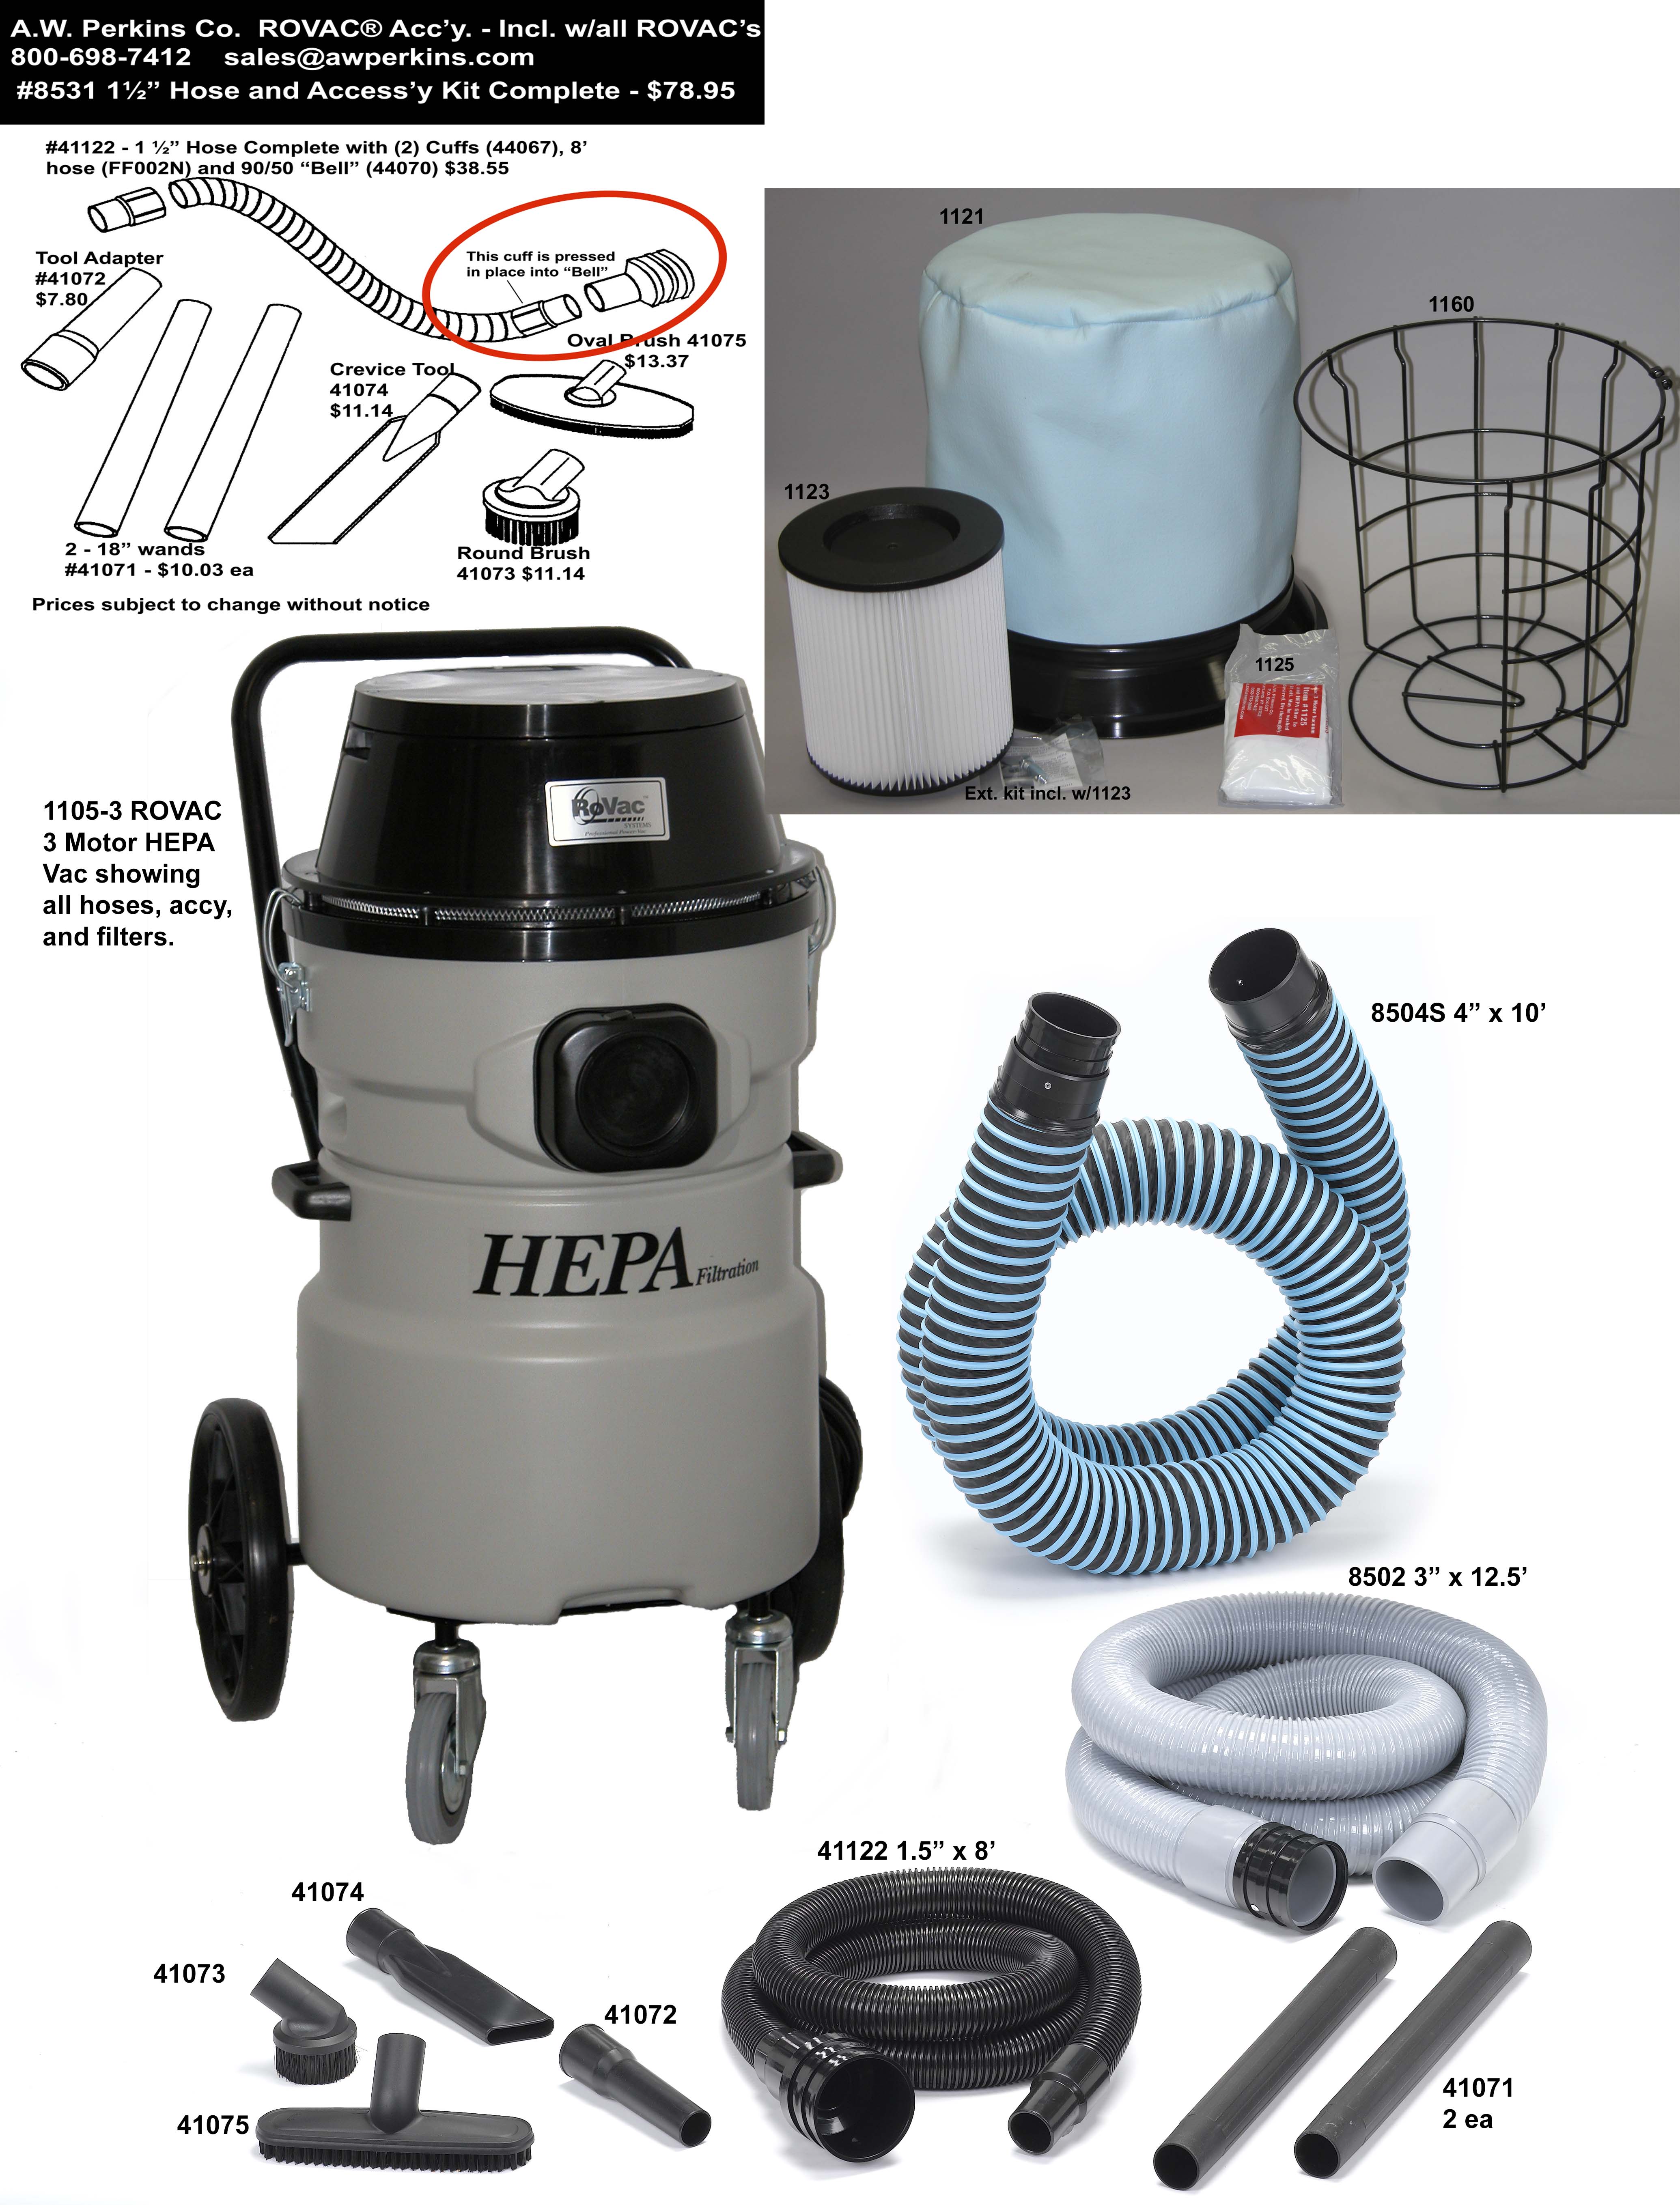 1105-3 ROVAC® Chimney Sweep's Vacuum - 3 Motor Fixed Trolley HEPA Vacuum